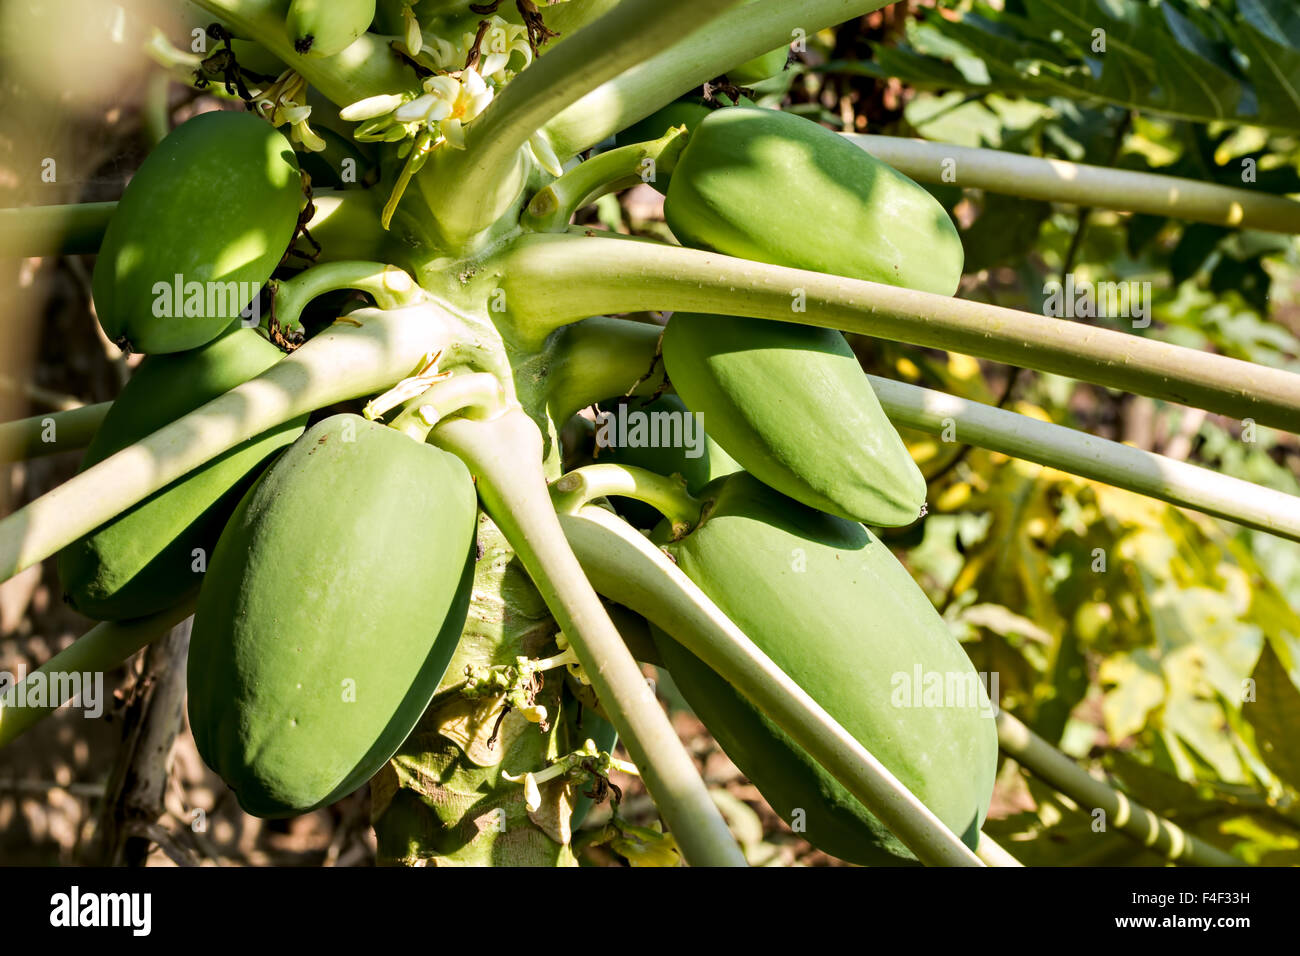 Carica papaya fruits on its tree Stock Photo